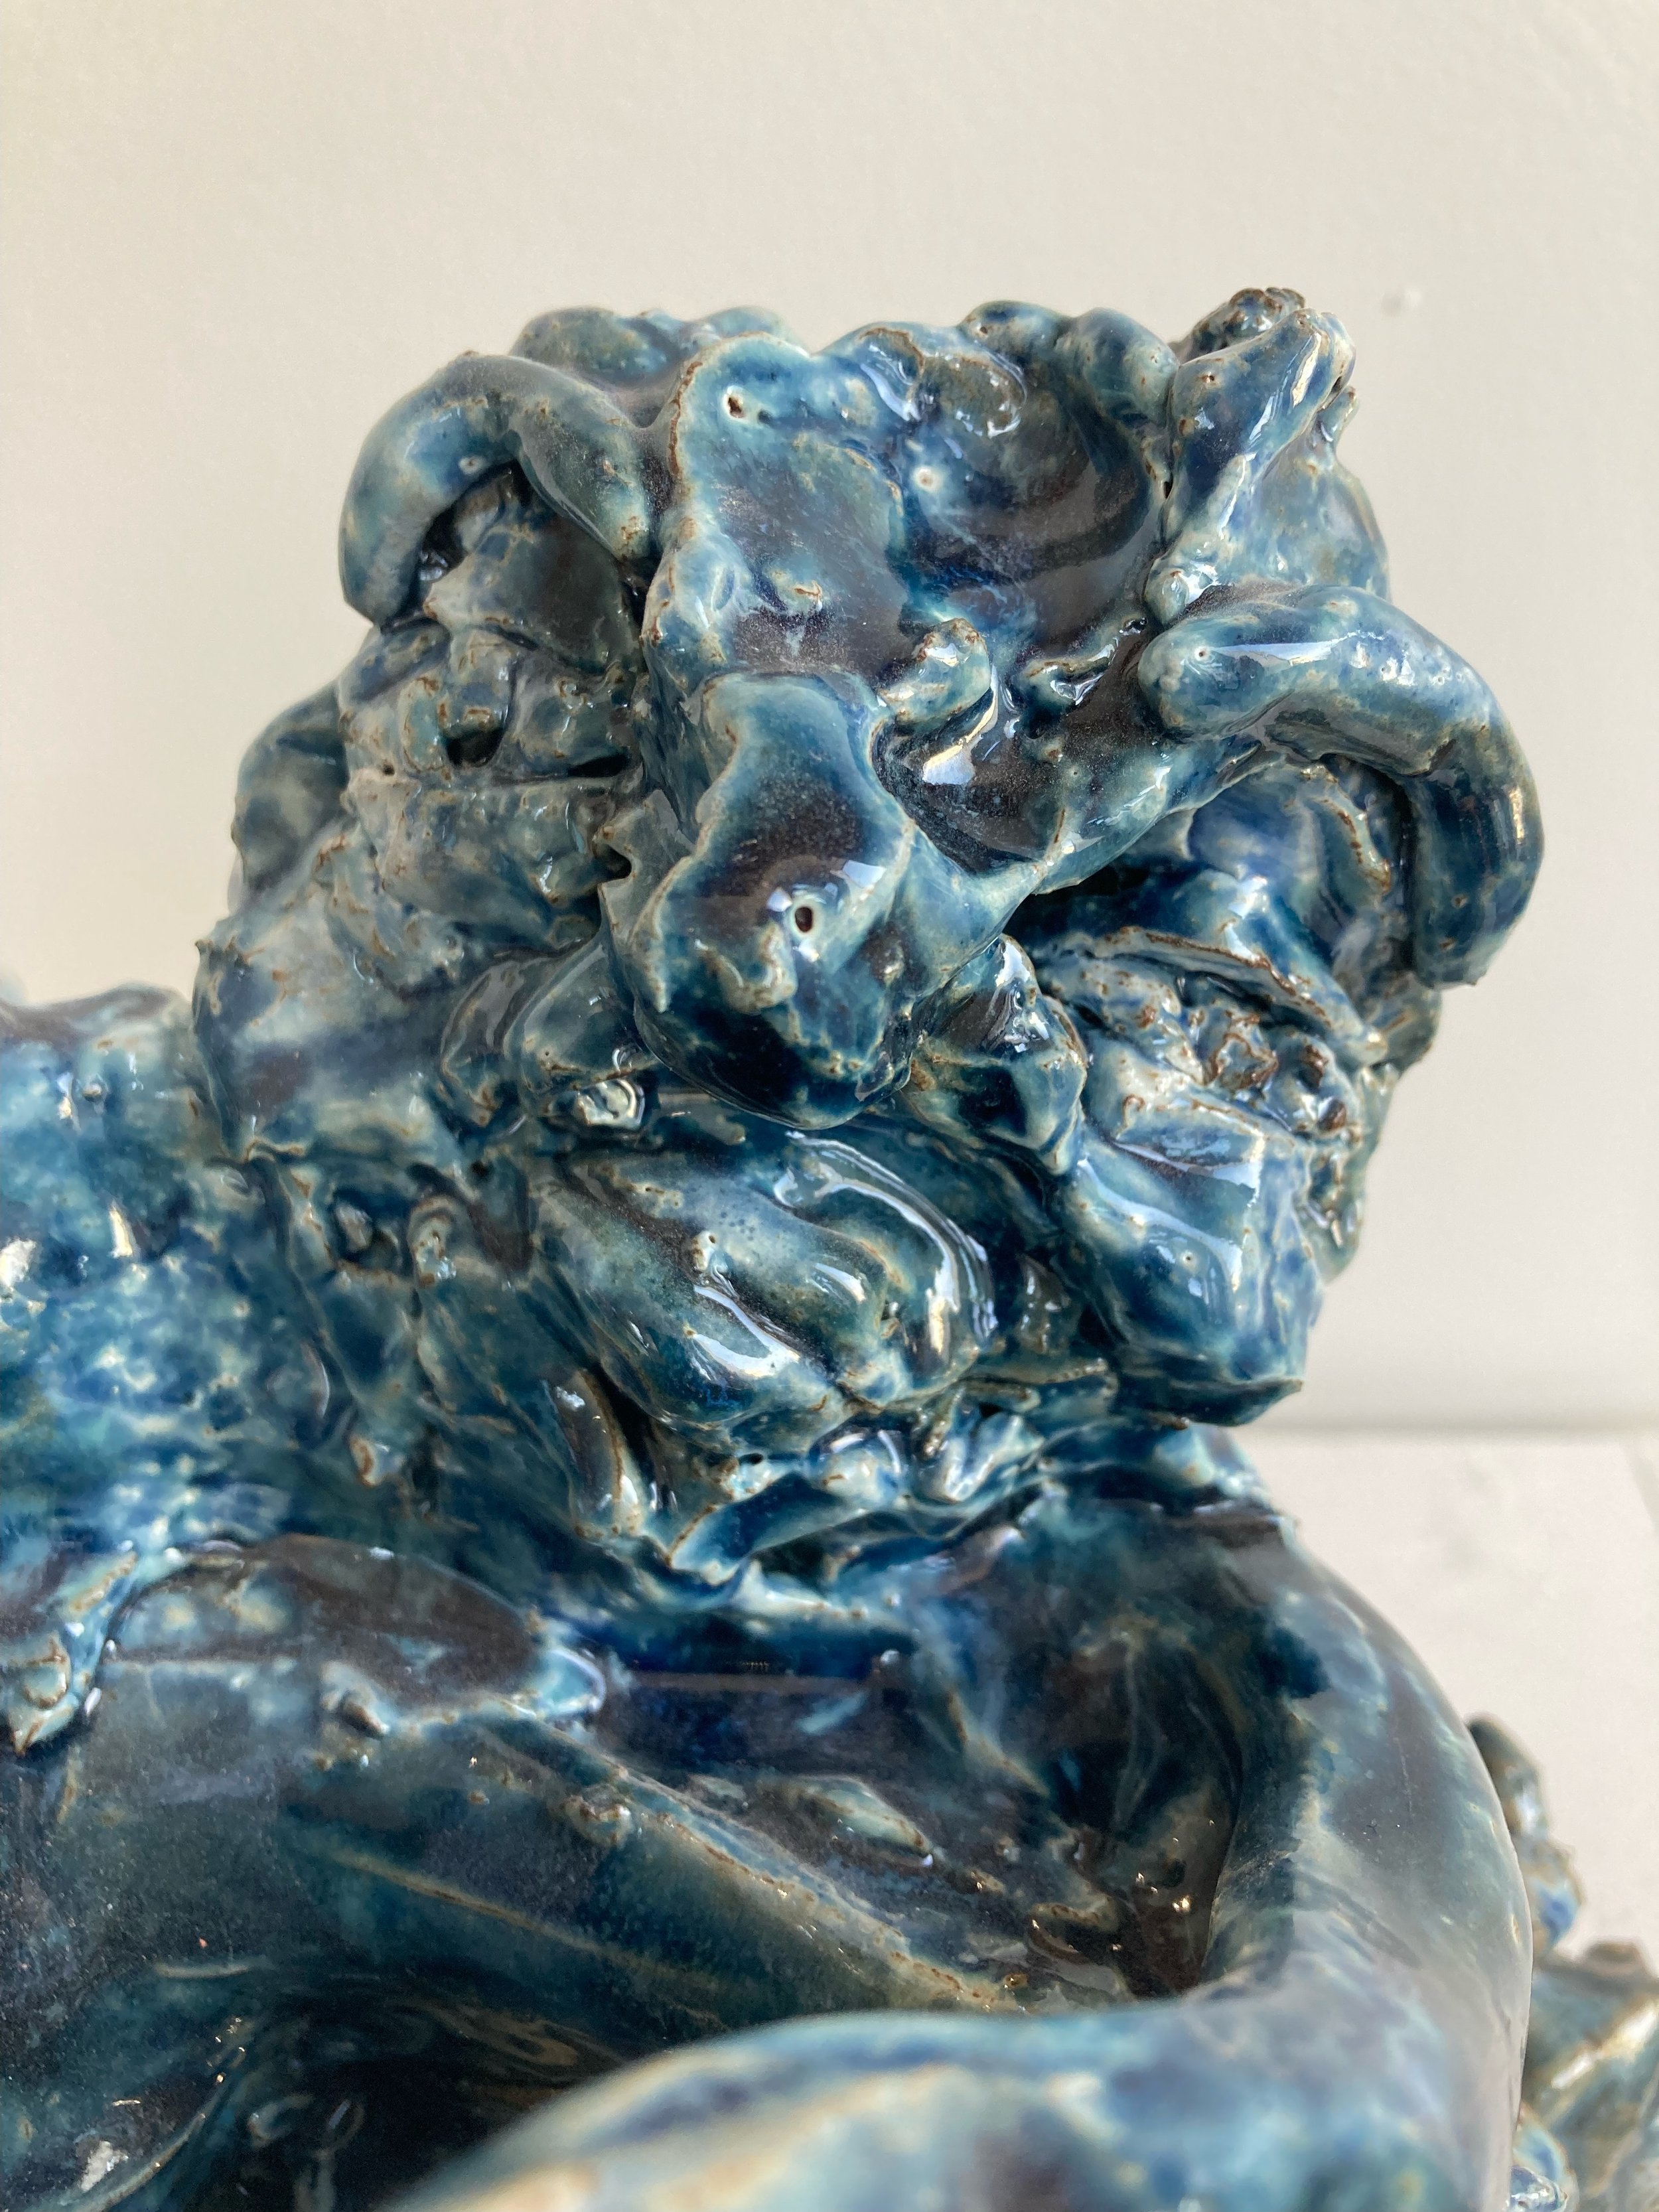  Figure/Vessel (Detail), Glazed ceramic, 11” X 8.5” X 11”, 2021 